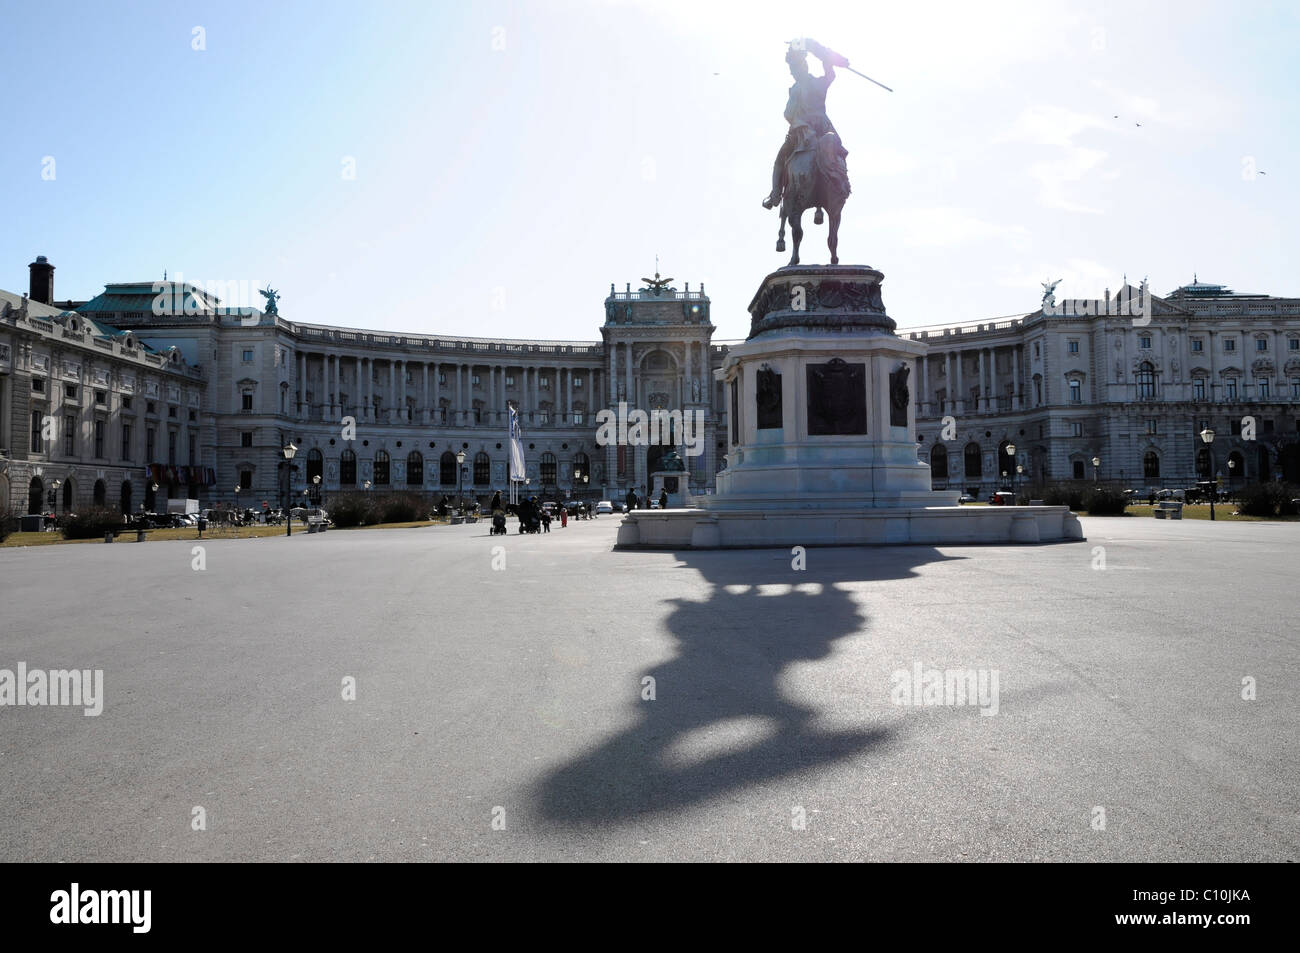 Erzherzog Karl-Denkmal monument, Heldenplatz Heroes Square, Hofburg Imperial Palace, Vienna, Austria, Europe Stock Photo